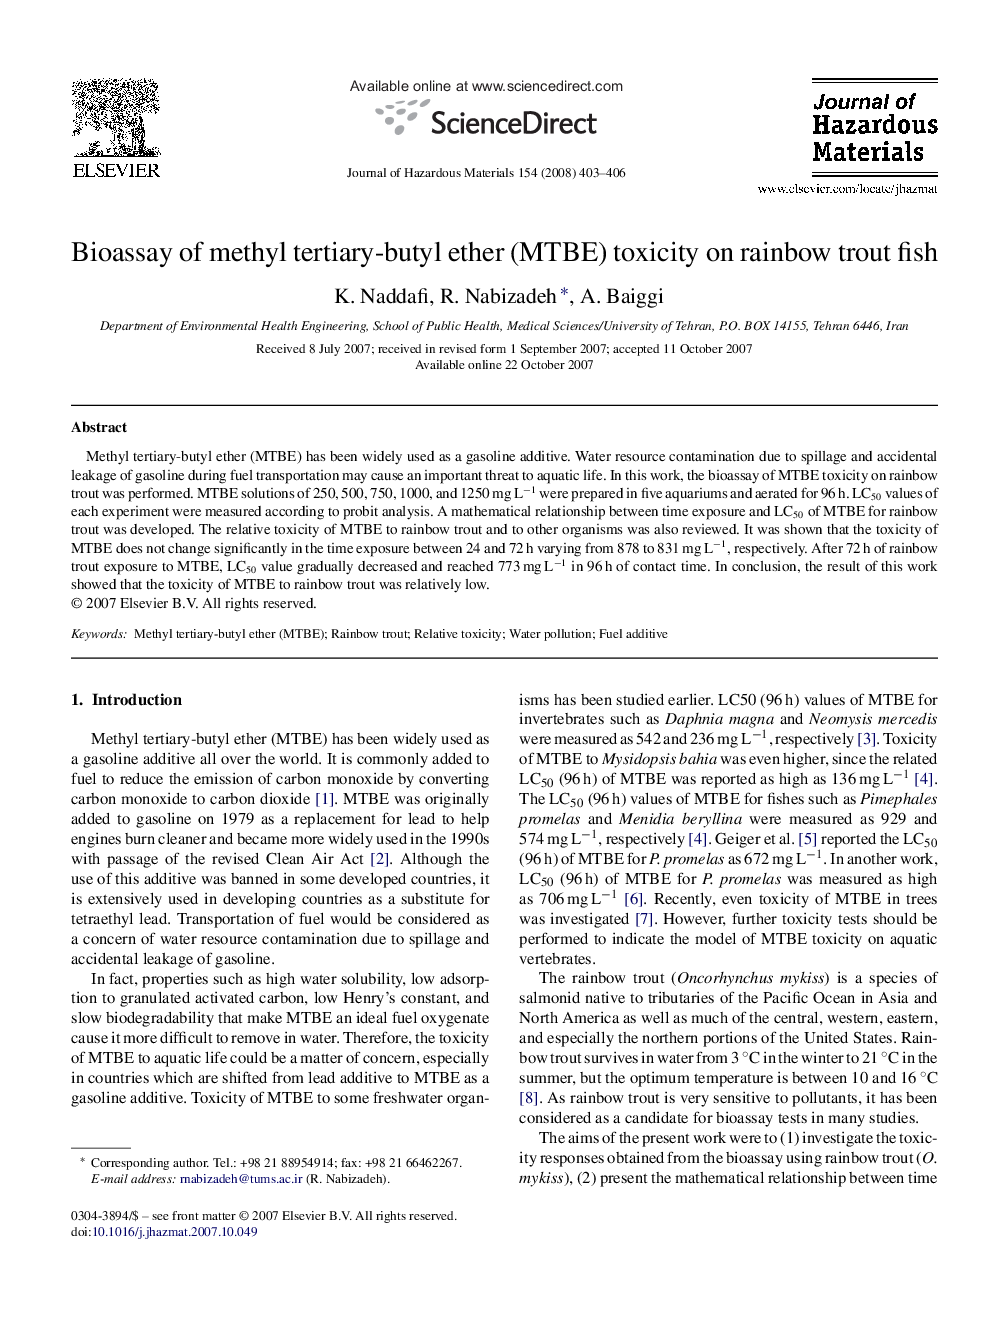 Bioassay of methyl tertiary-butyl ether (MTBE) toxicity on rainbow trout fish